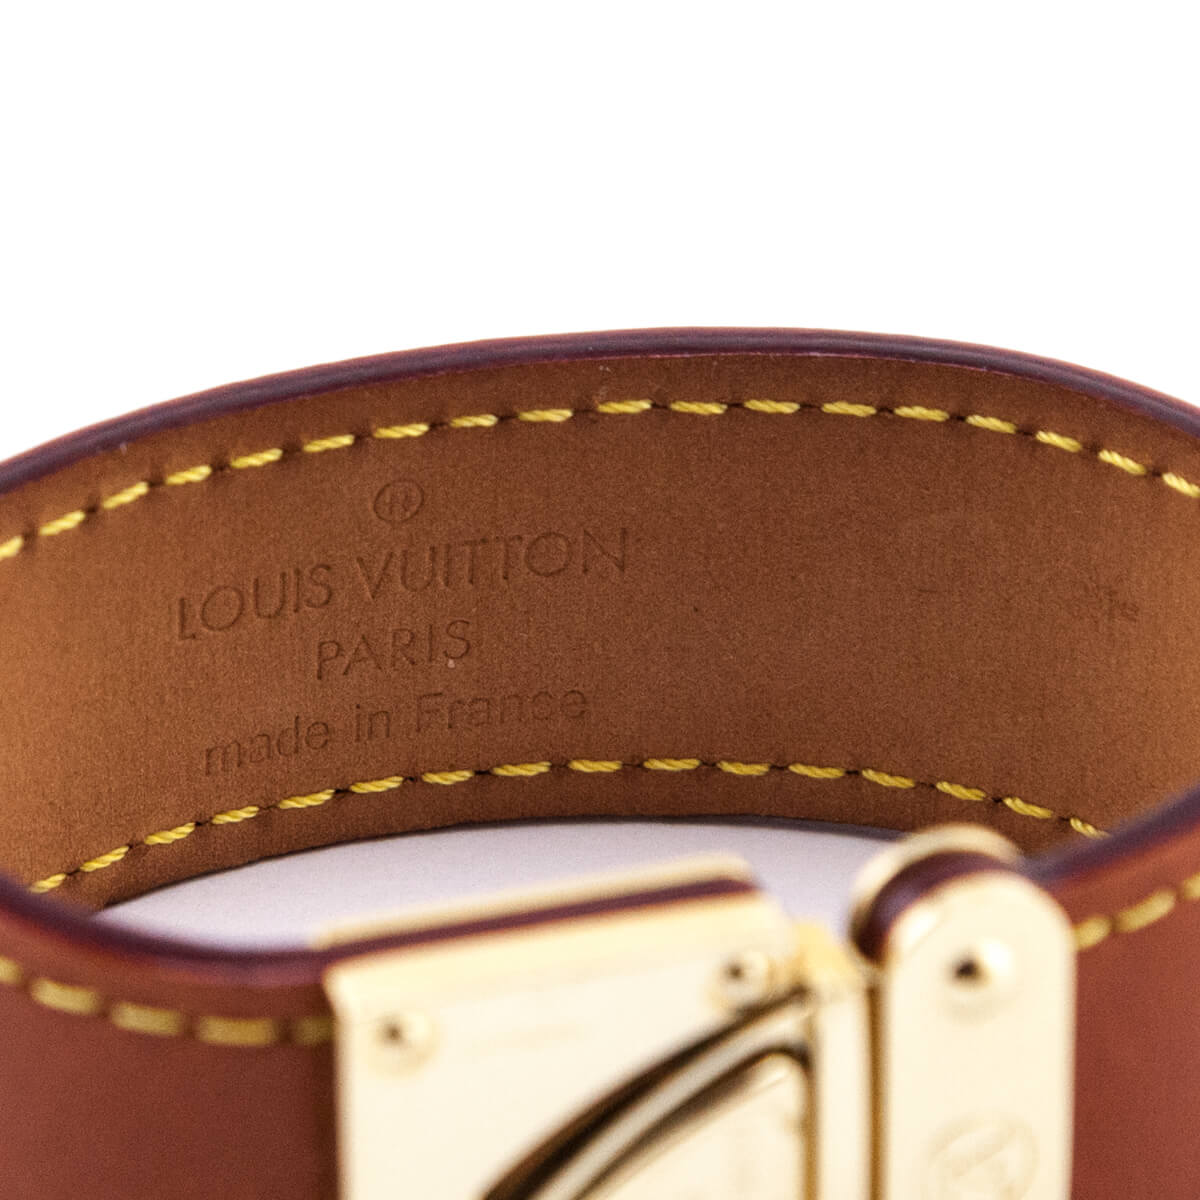 Louis Vuitton Brown Leather Koala Cuff Bracelet